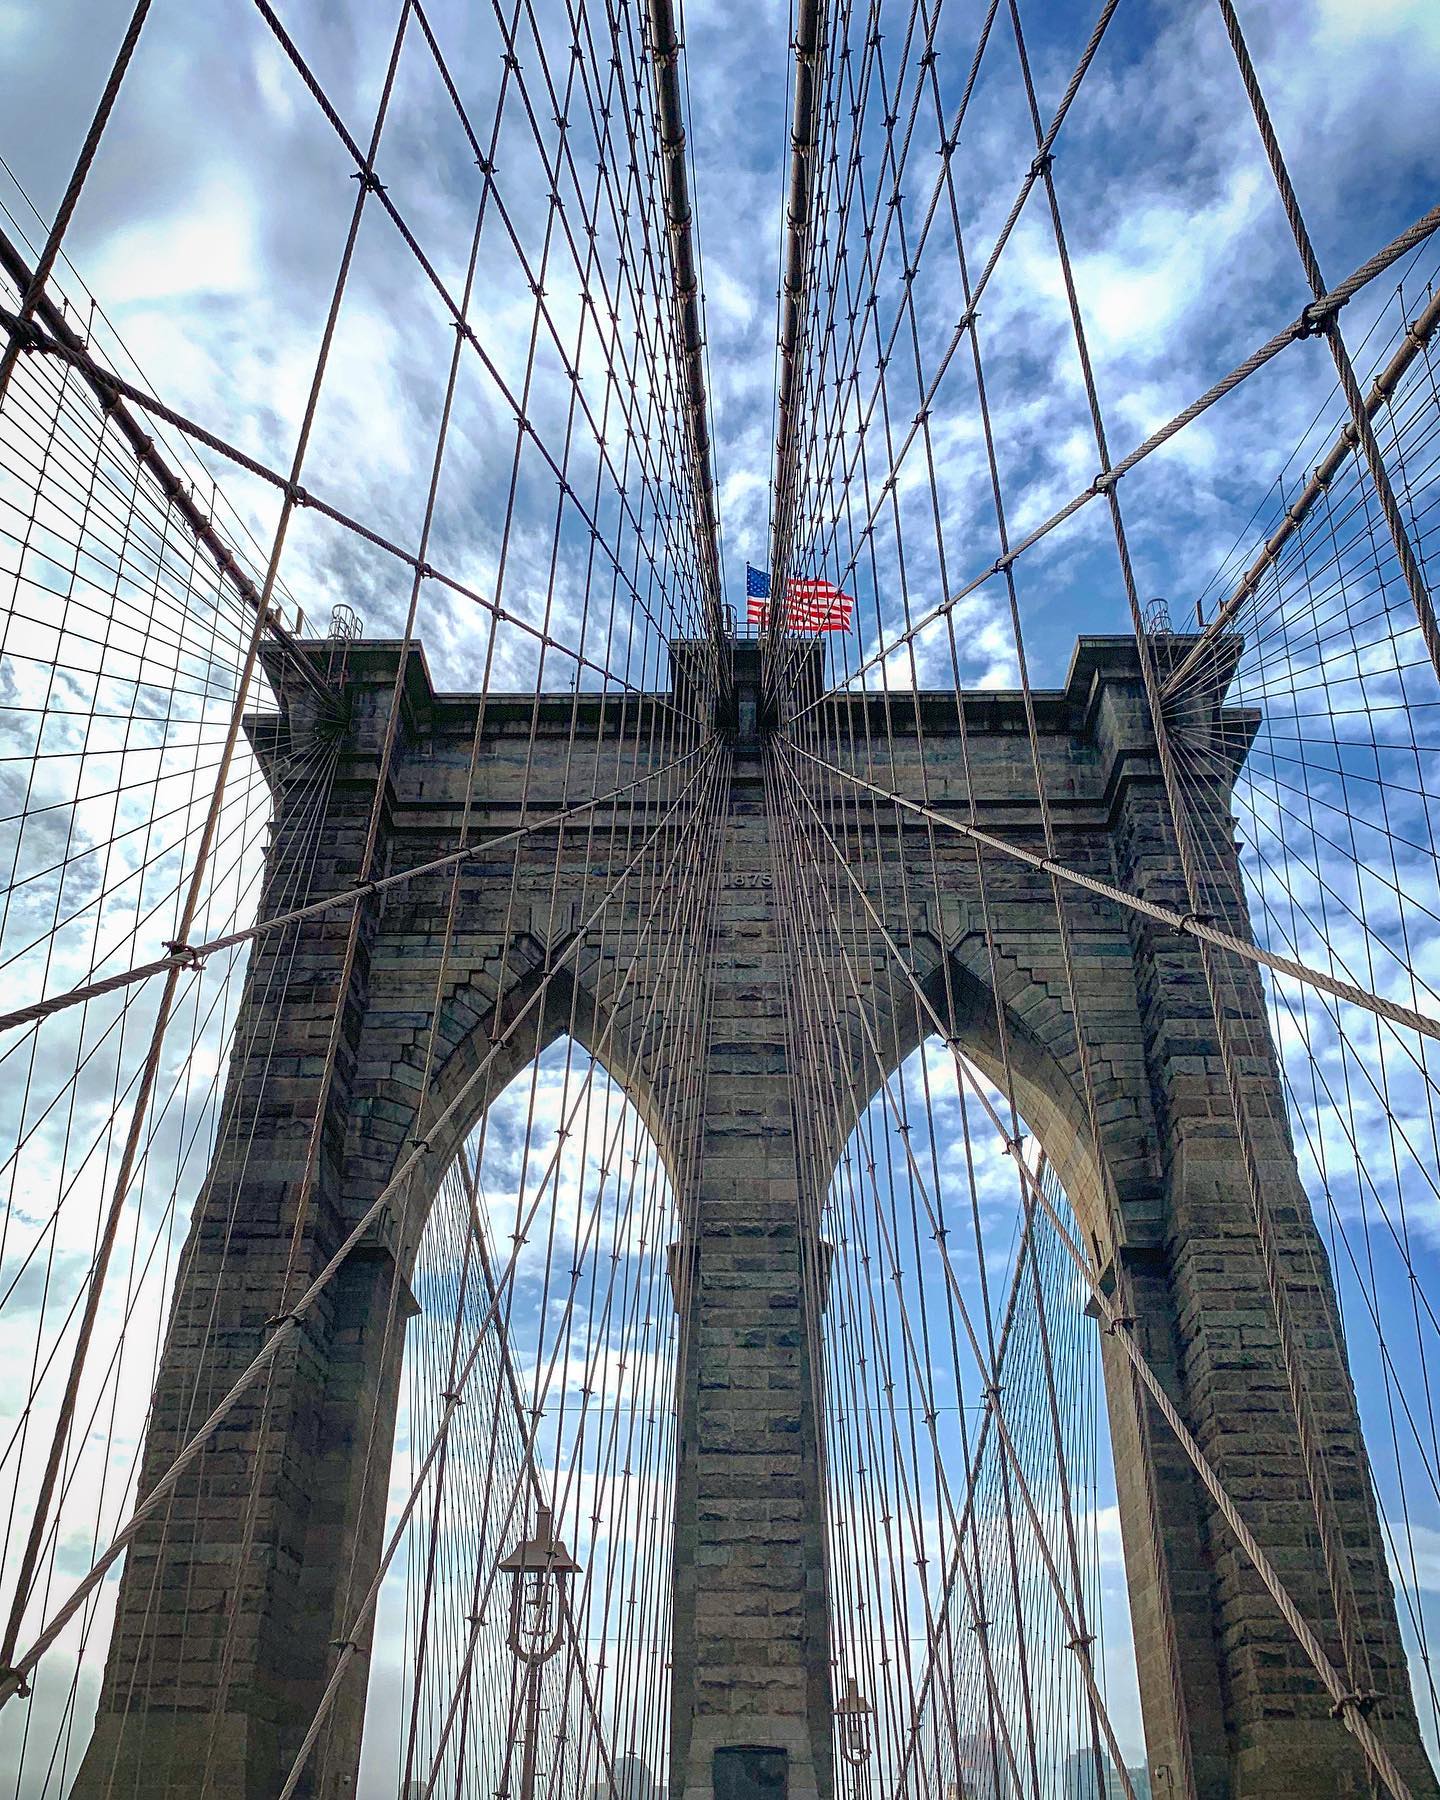 Brooklyn Bridge 🇺🇸
.
.
#newyork #newyorkcity #nyc #brooklynbridge #brooklyn #usa #ny #travel #traveller #traveler #traveling #travelling #travelblogger #travelblog #bridge #unitedstates #manhattan #chinatown #littleitaly #america #sun #sunny #sunnyday #landmark #landmarks #travelgram #brooklynny #instagood #bestofnewyork #newphotoyork